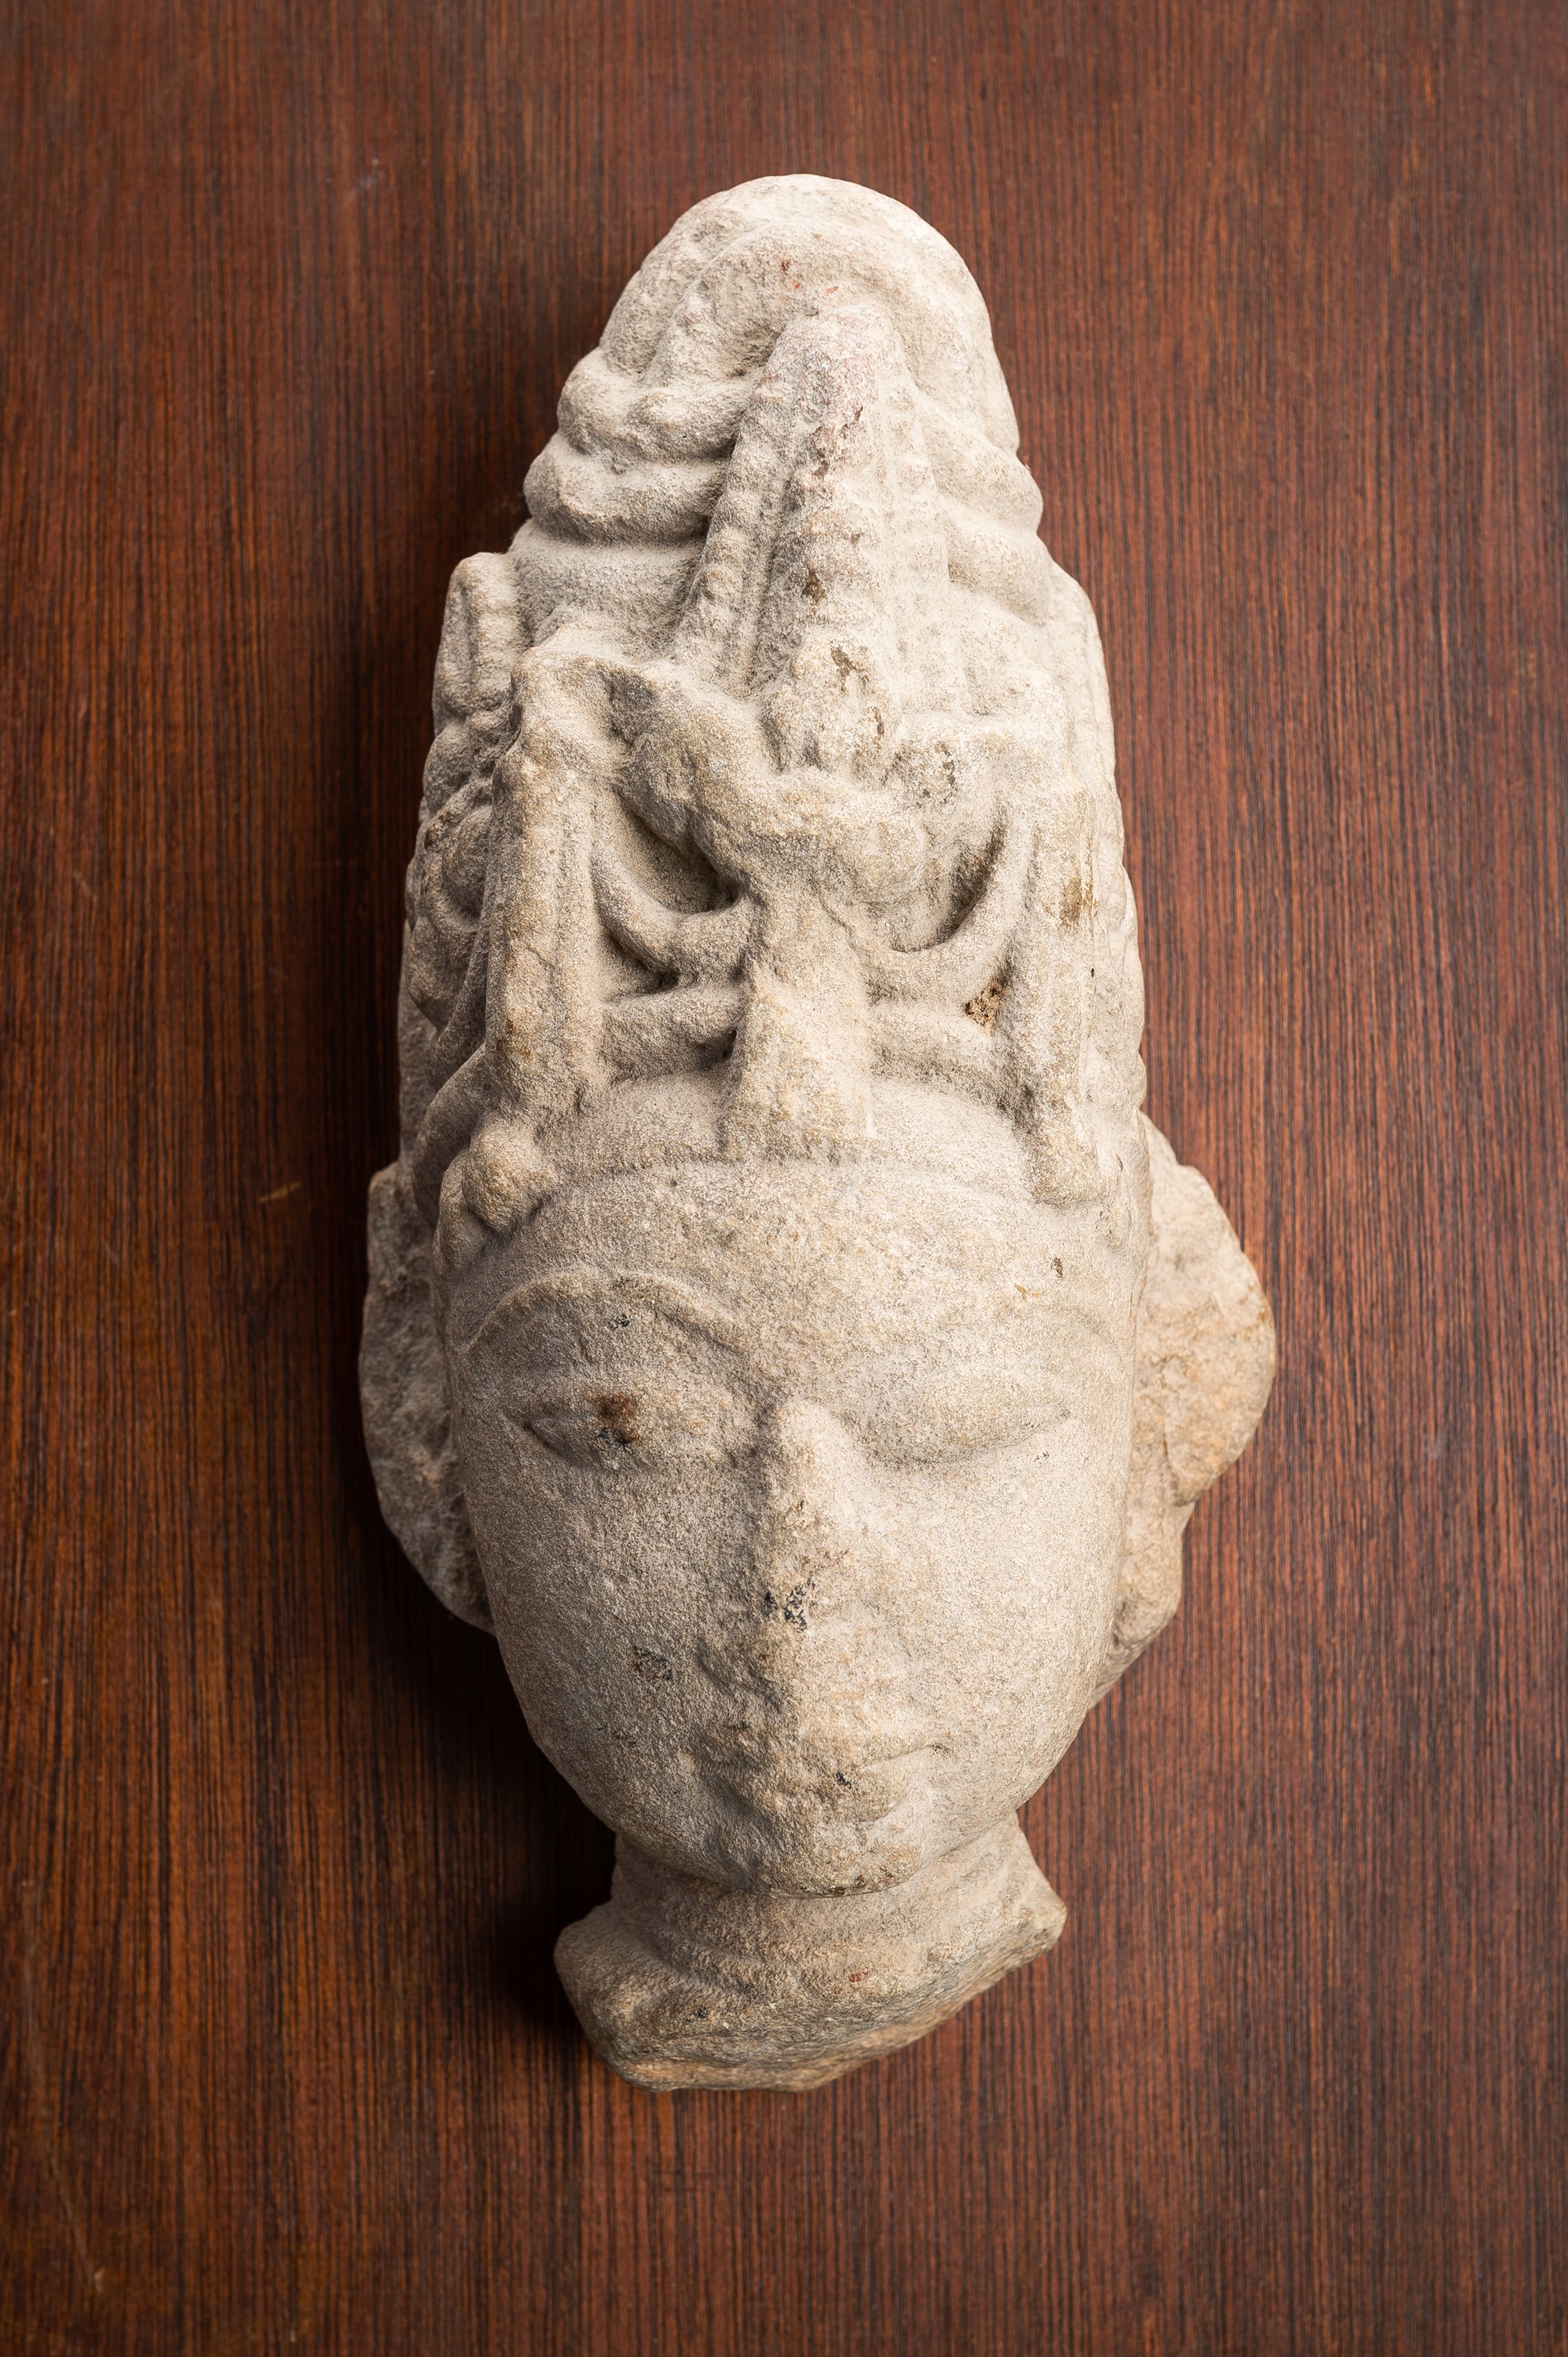 A SANDSTONE HEAD OF VISHNU WITH A MITER CROWN